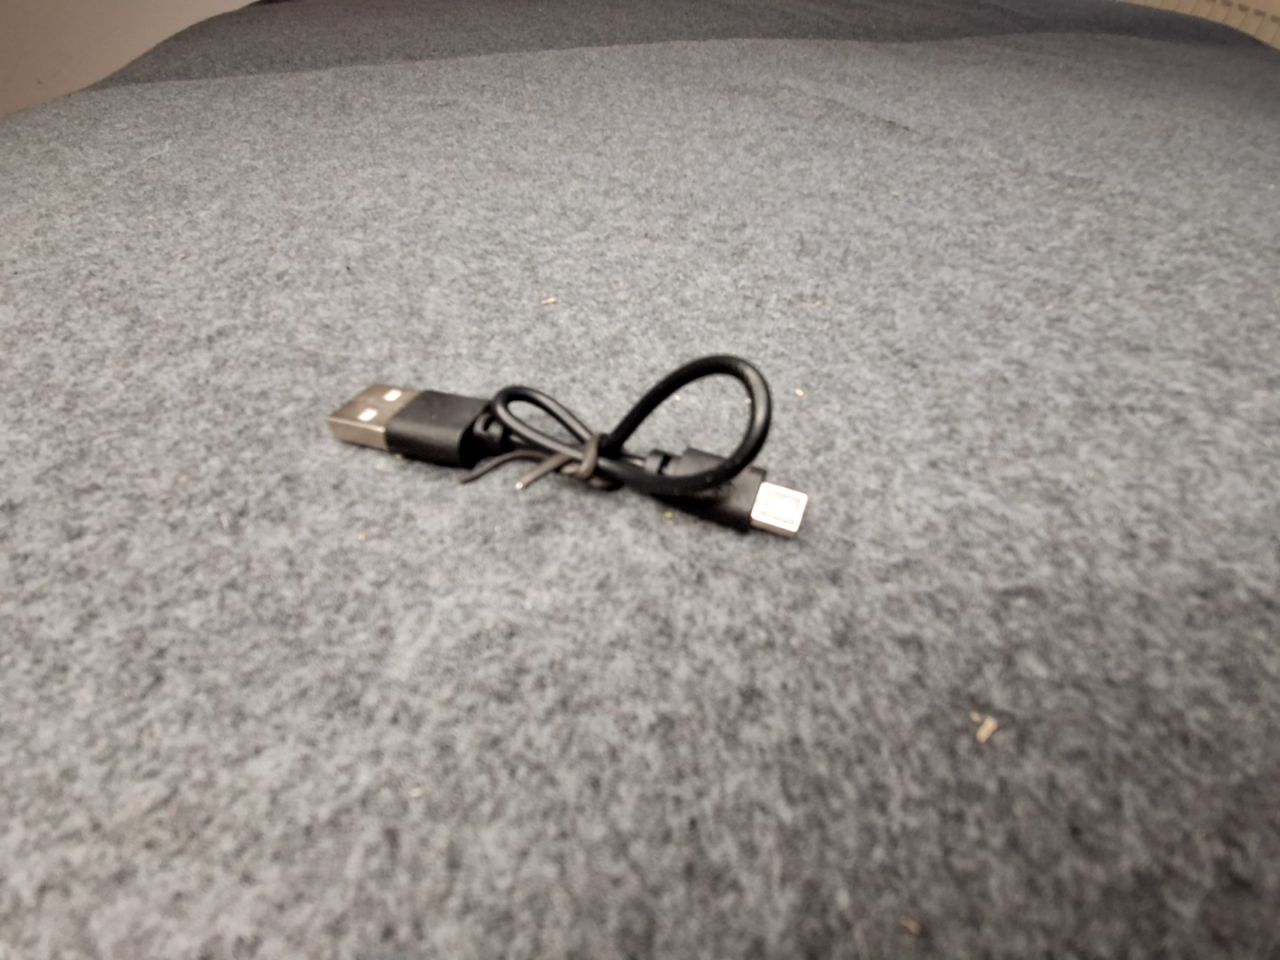 Kabel micro USB